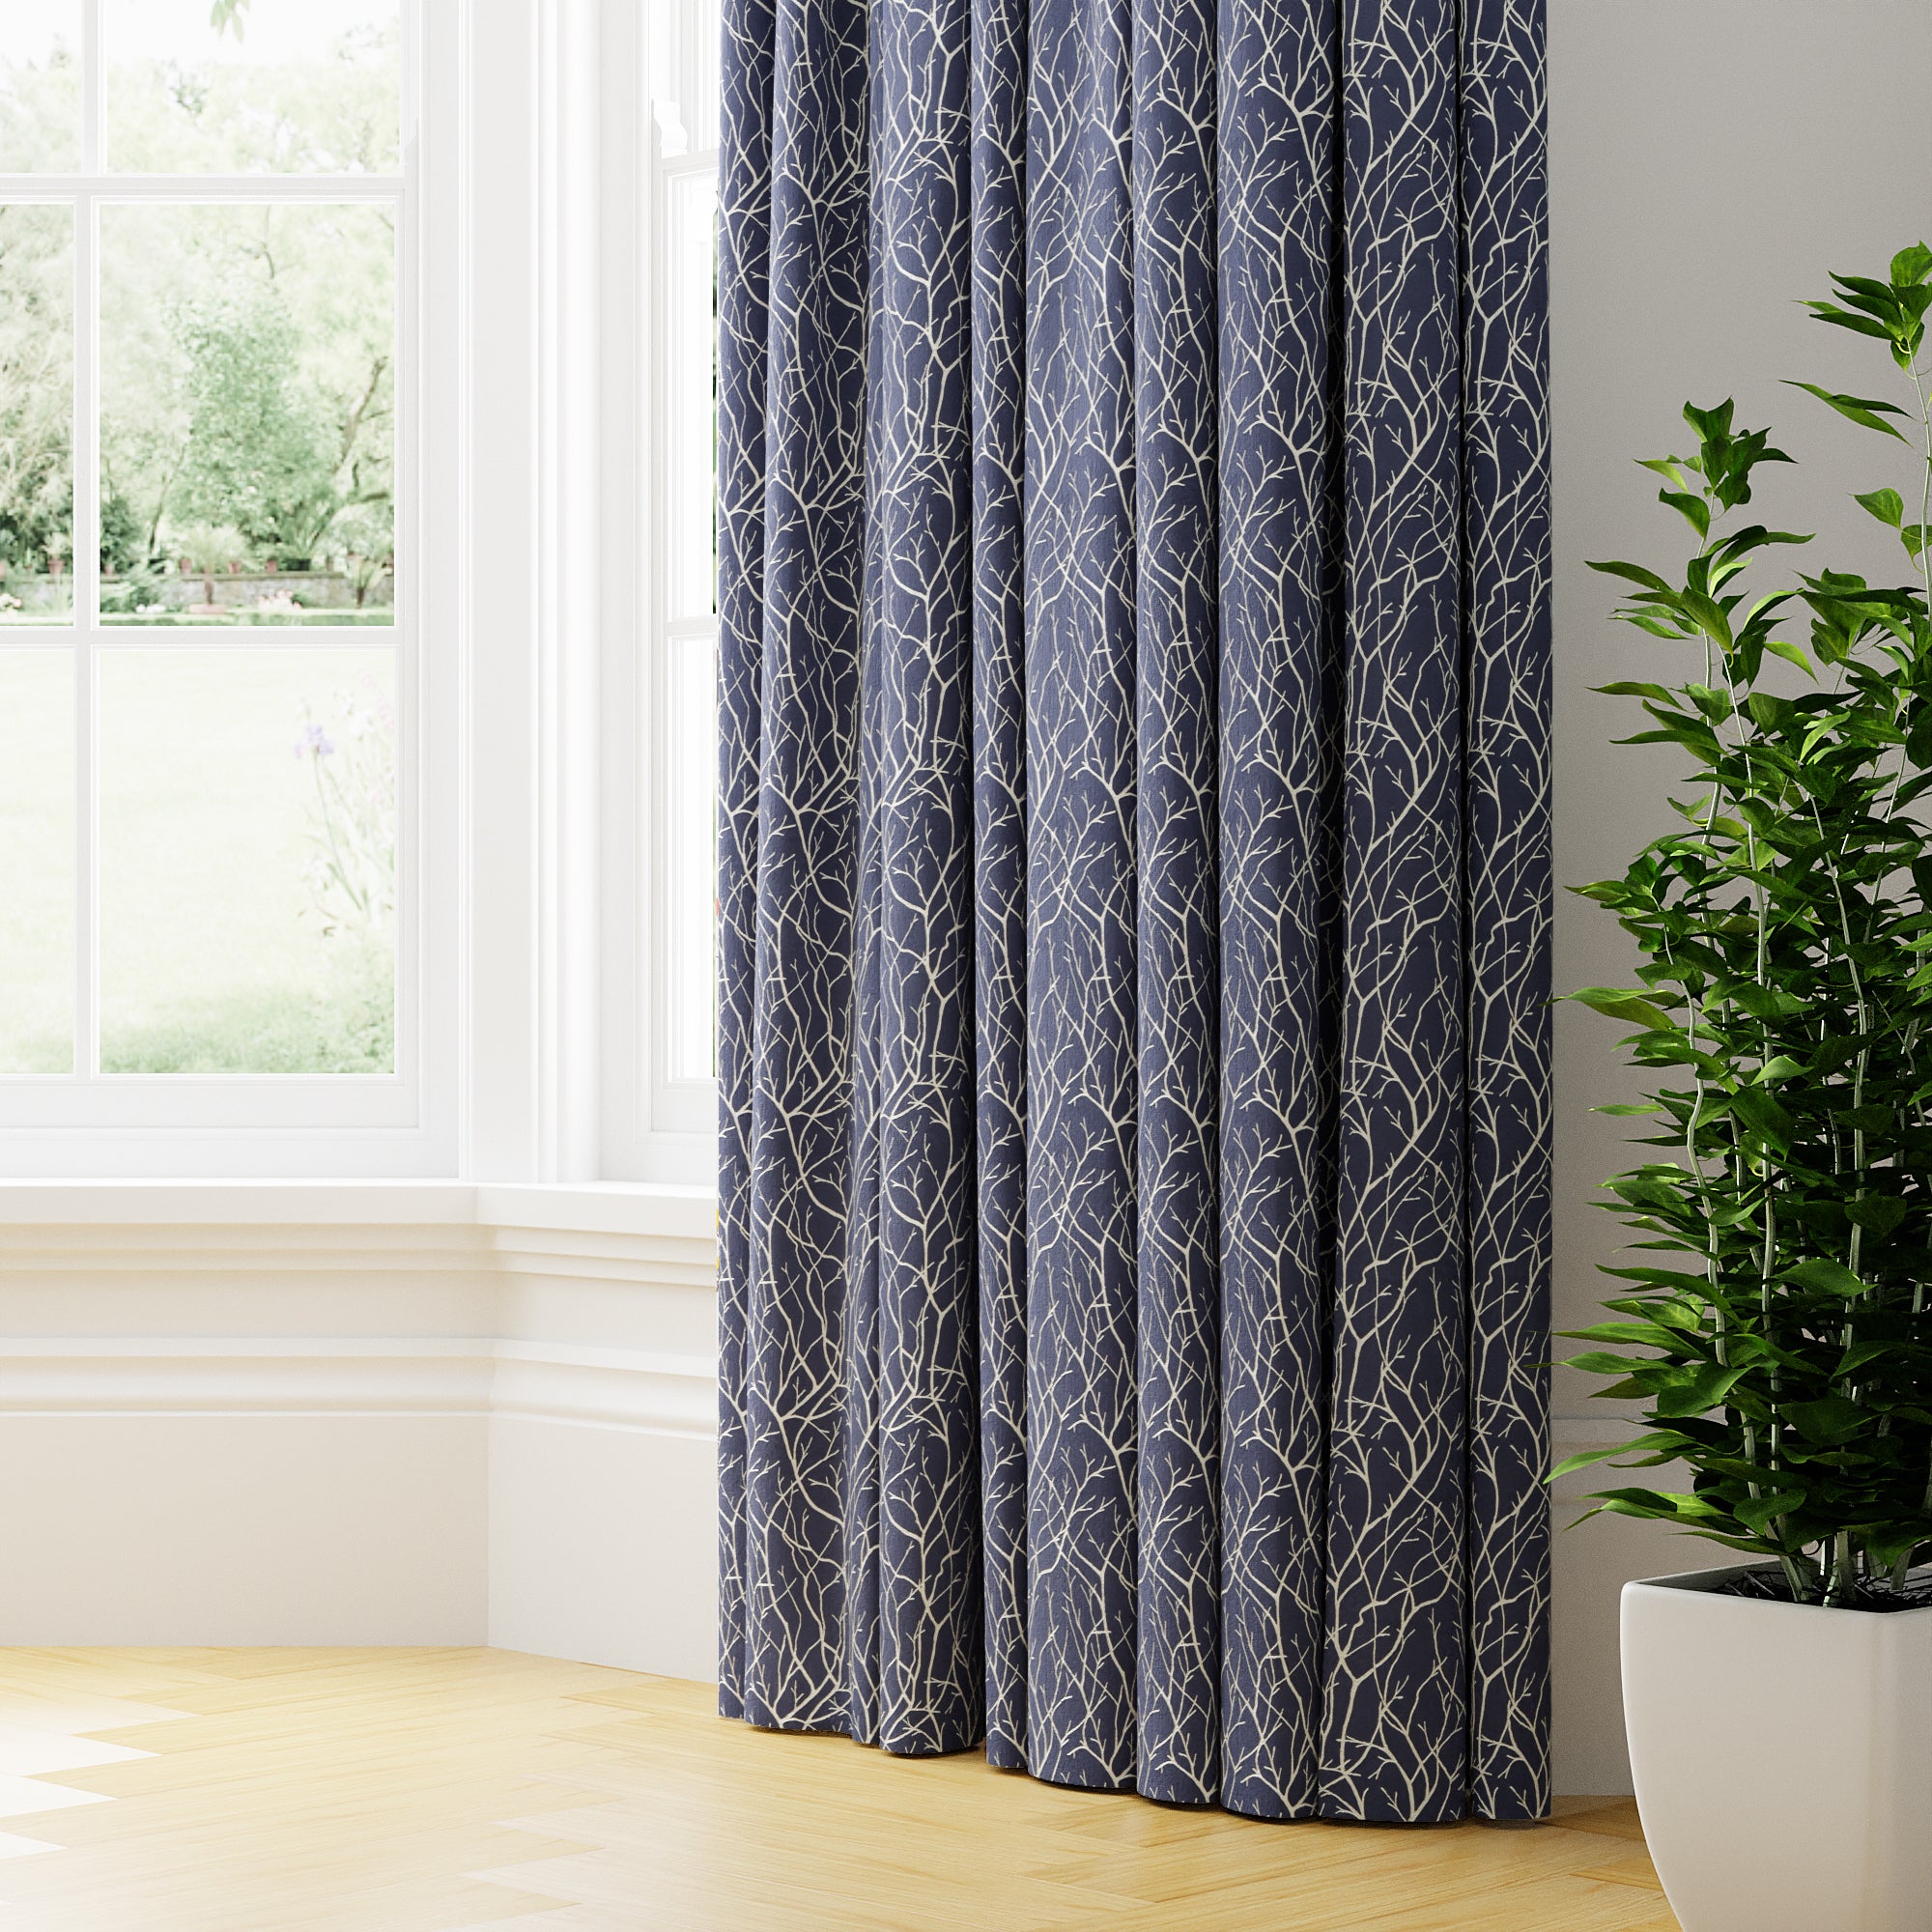 Maldon Made to Measure Curtains BlueWhite